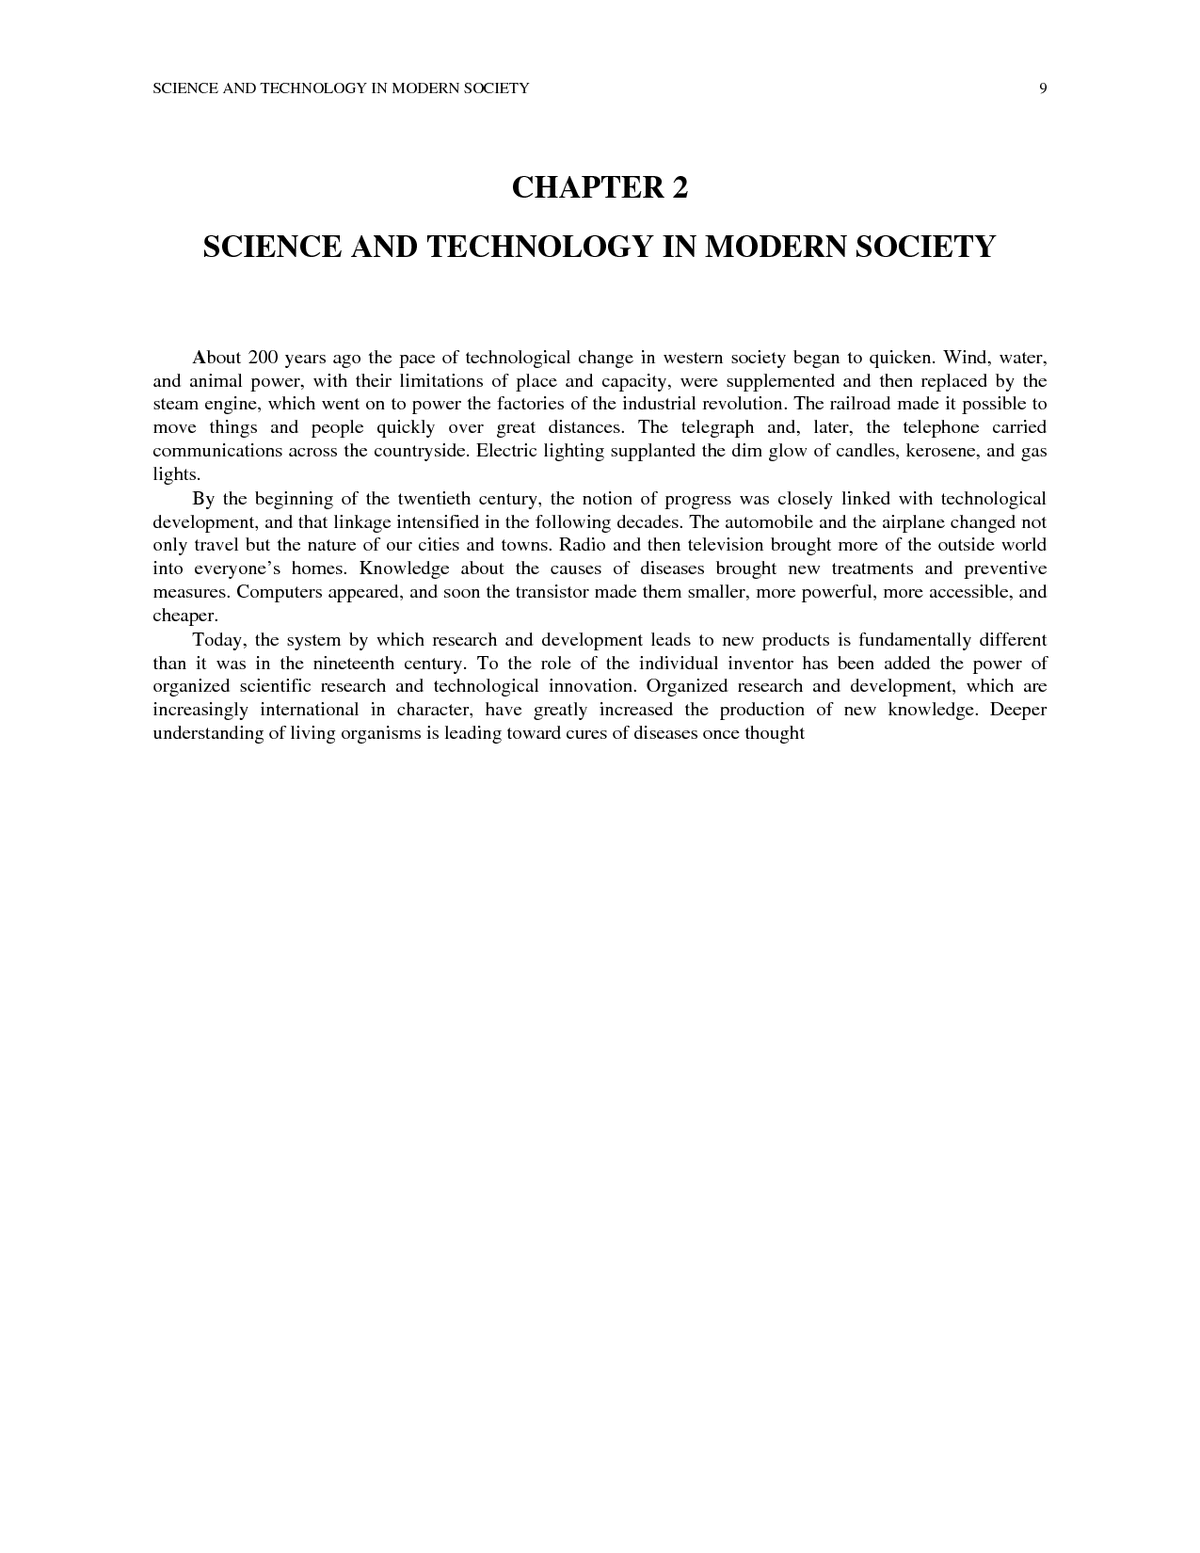 science in 21st century essay